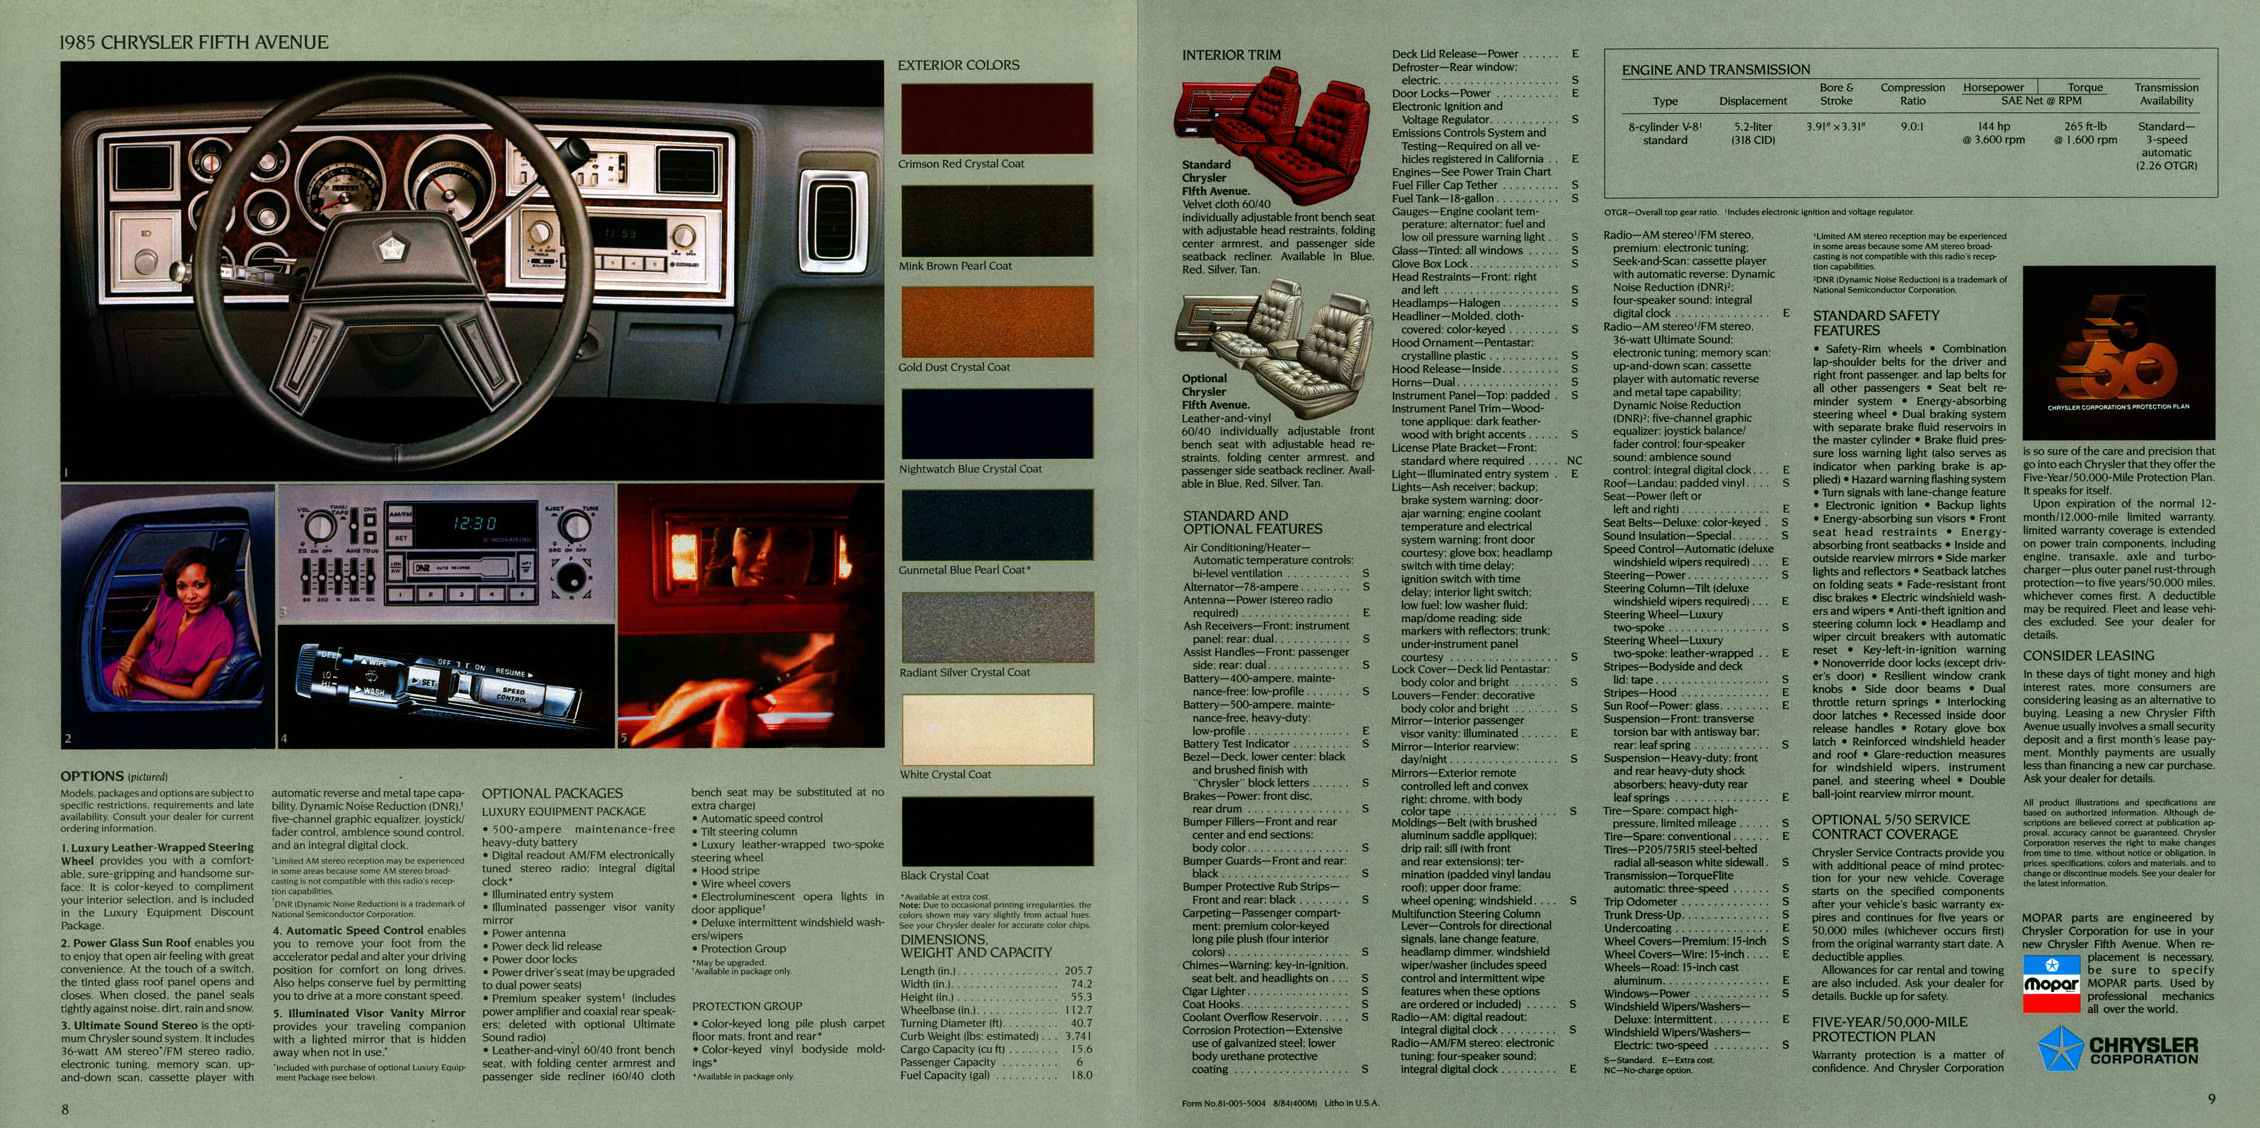 1985 Chrysler Fifth Avenue-08-09